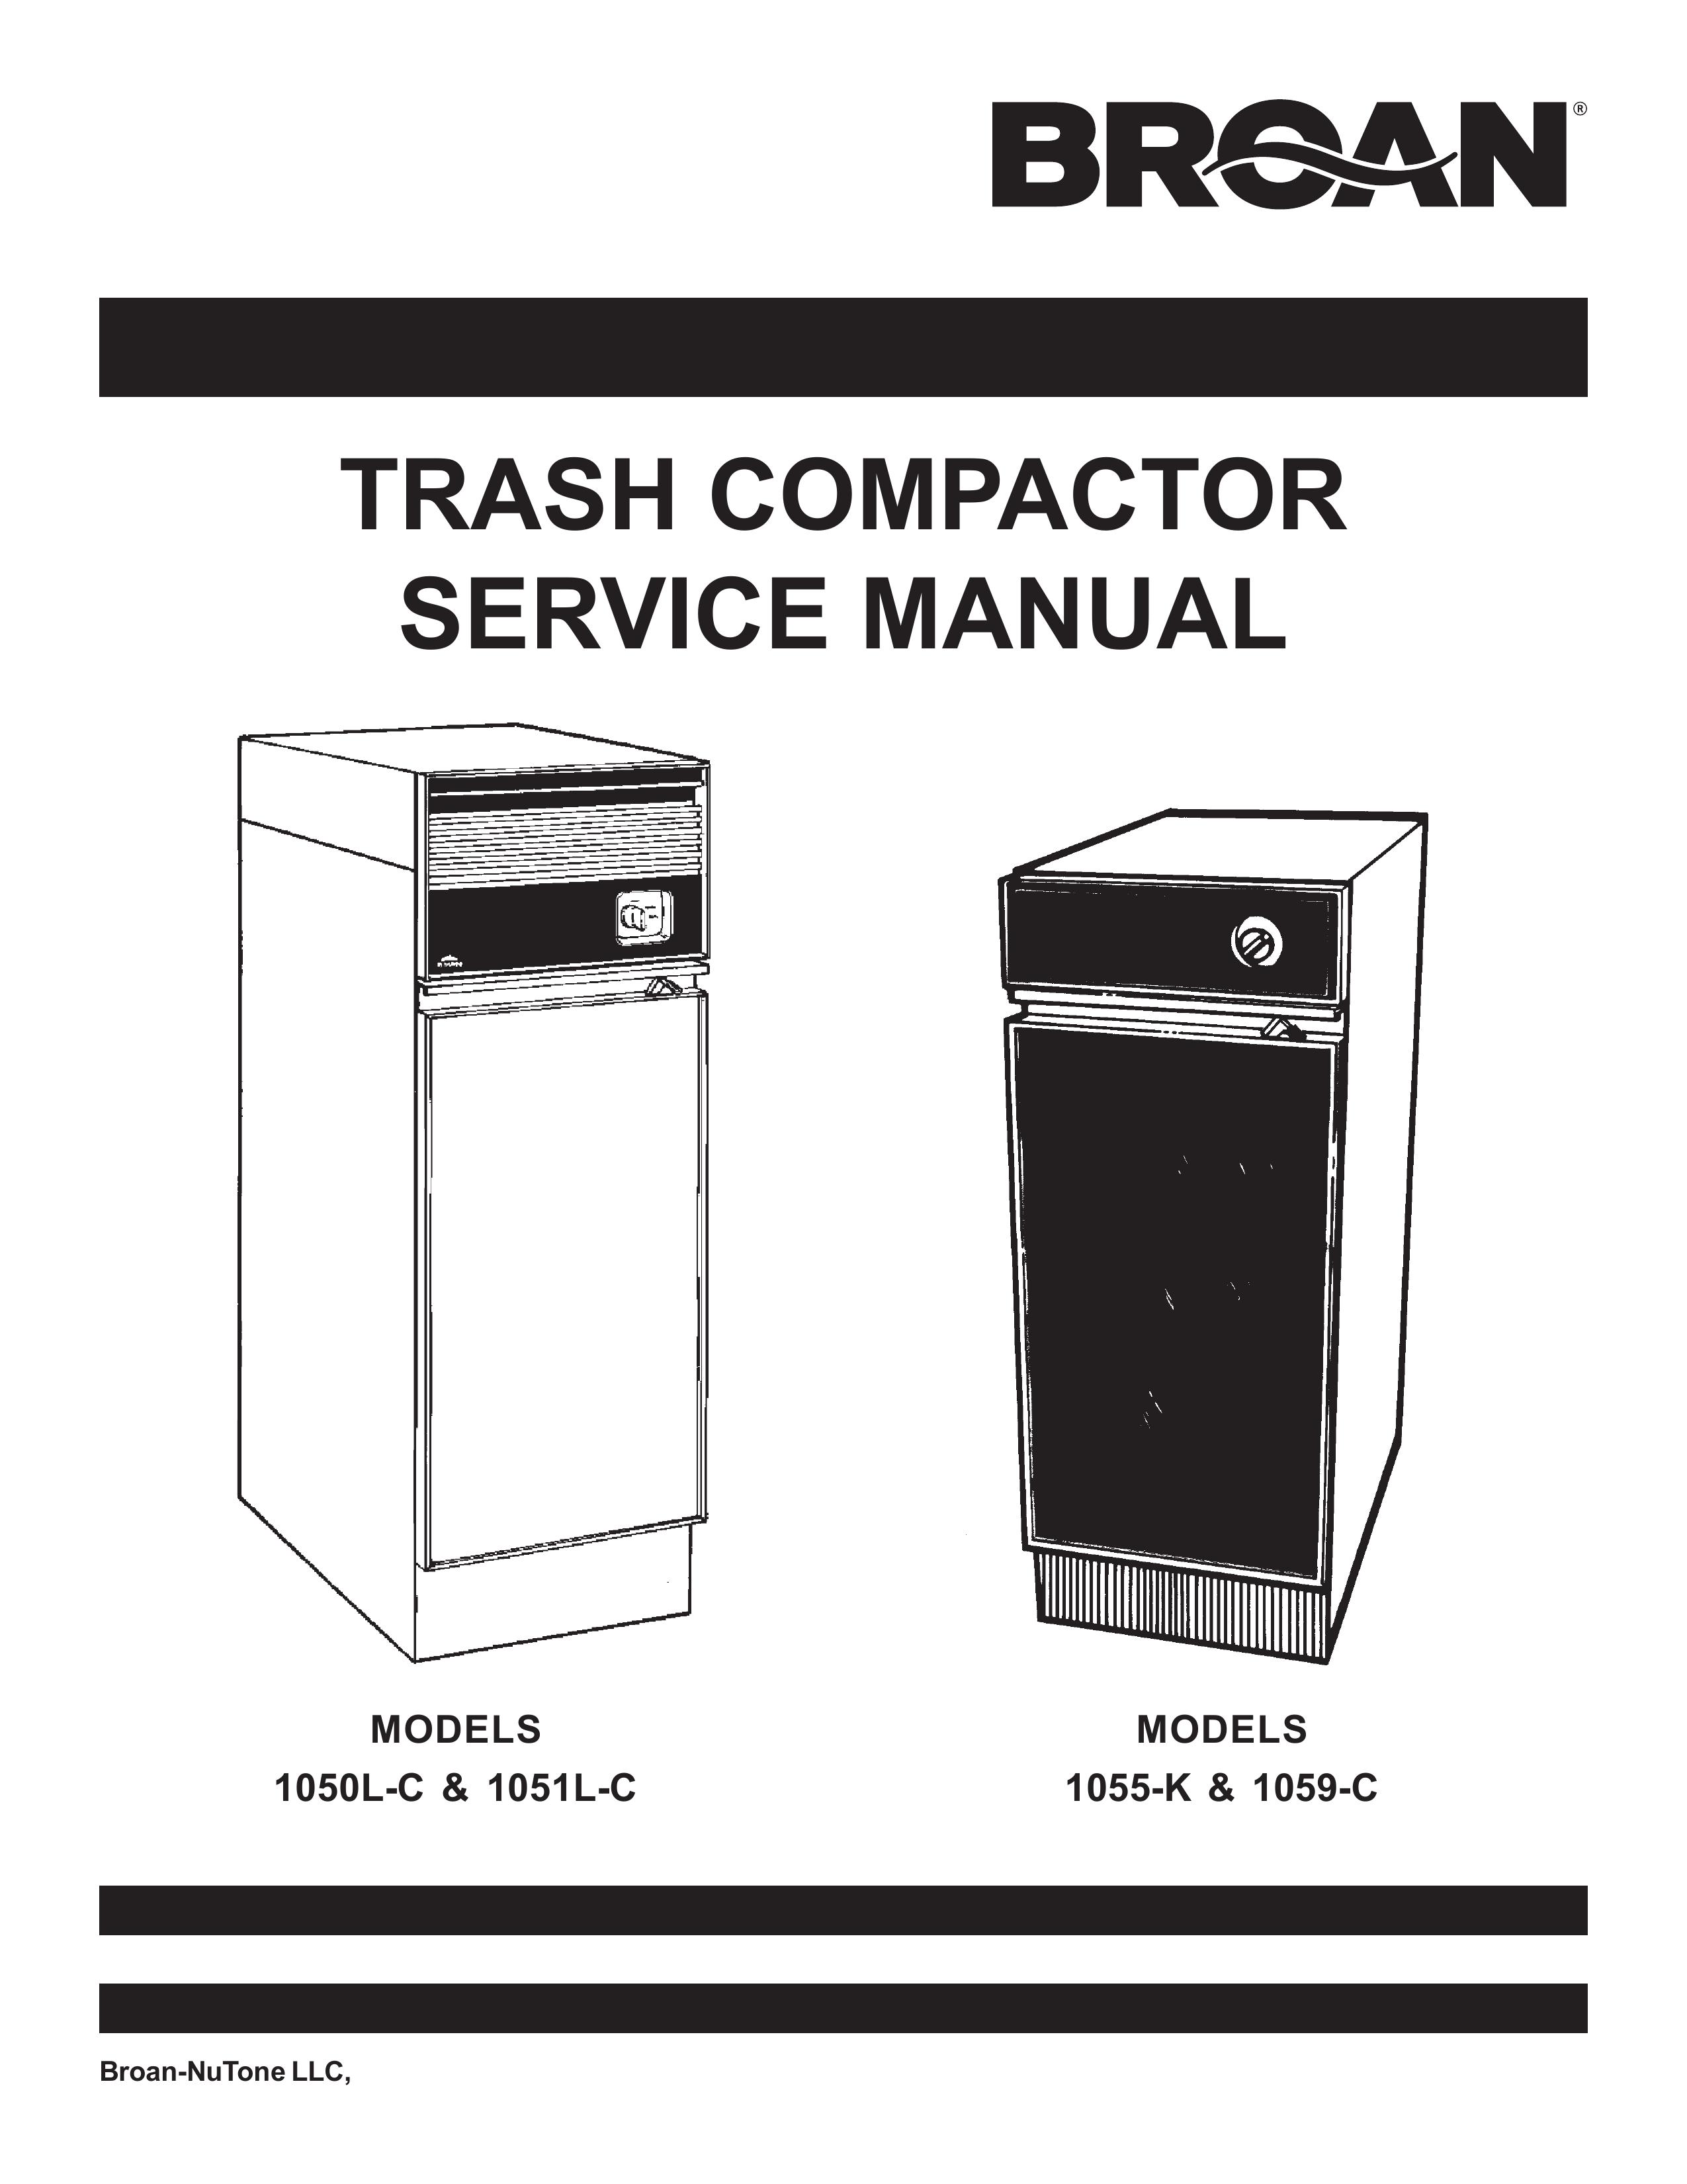 Broan 1050L-C Trash Compactor User Manual